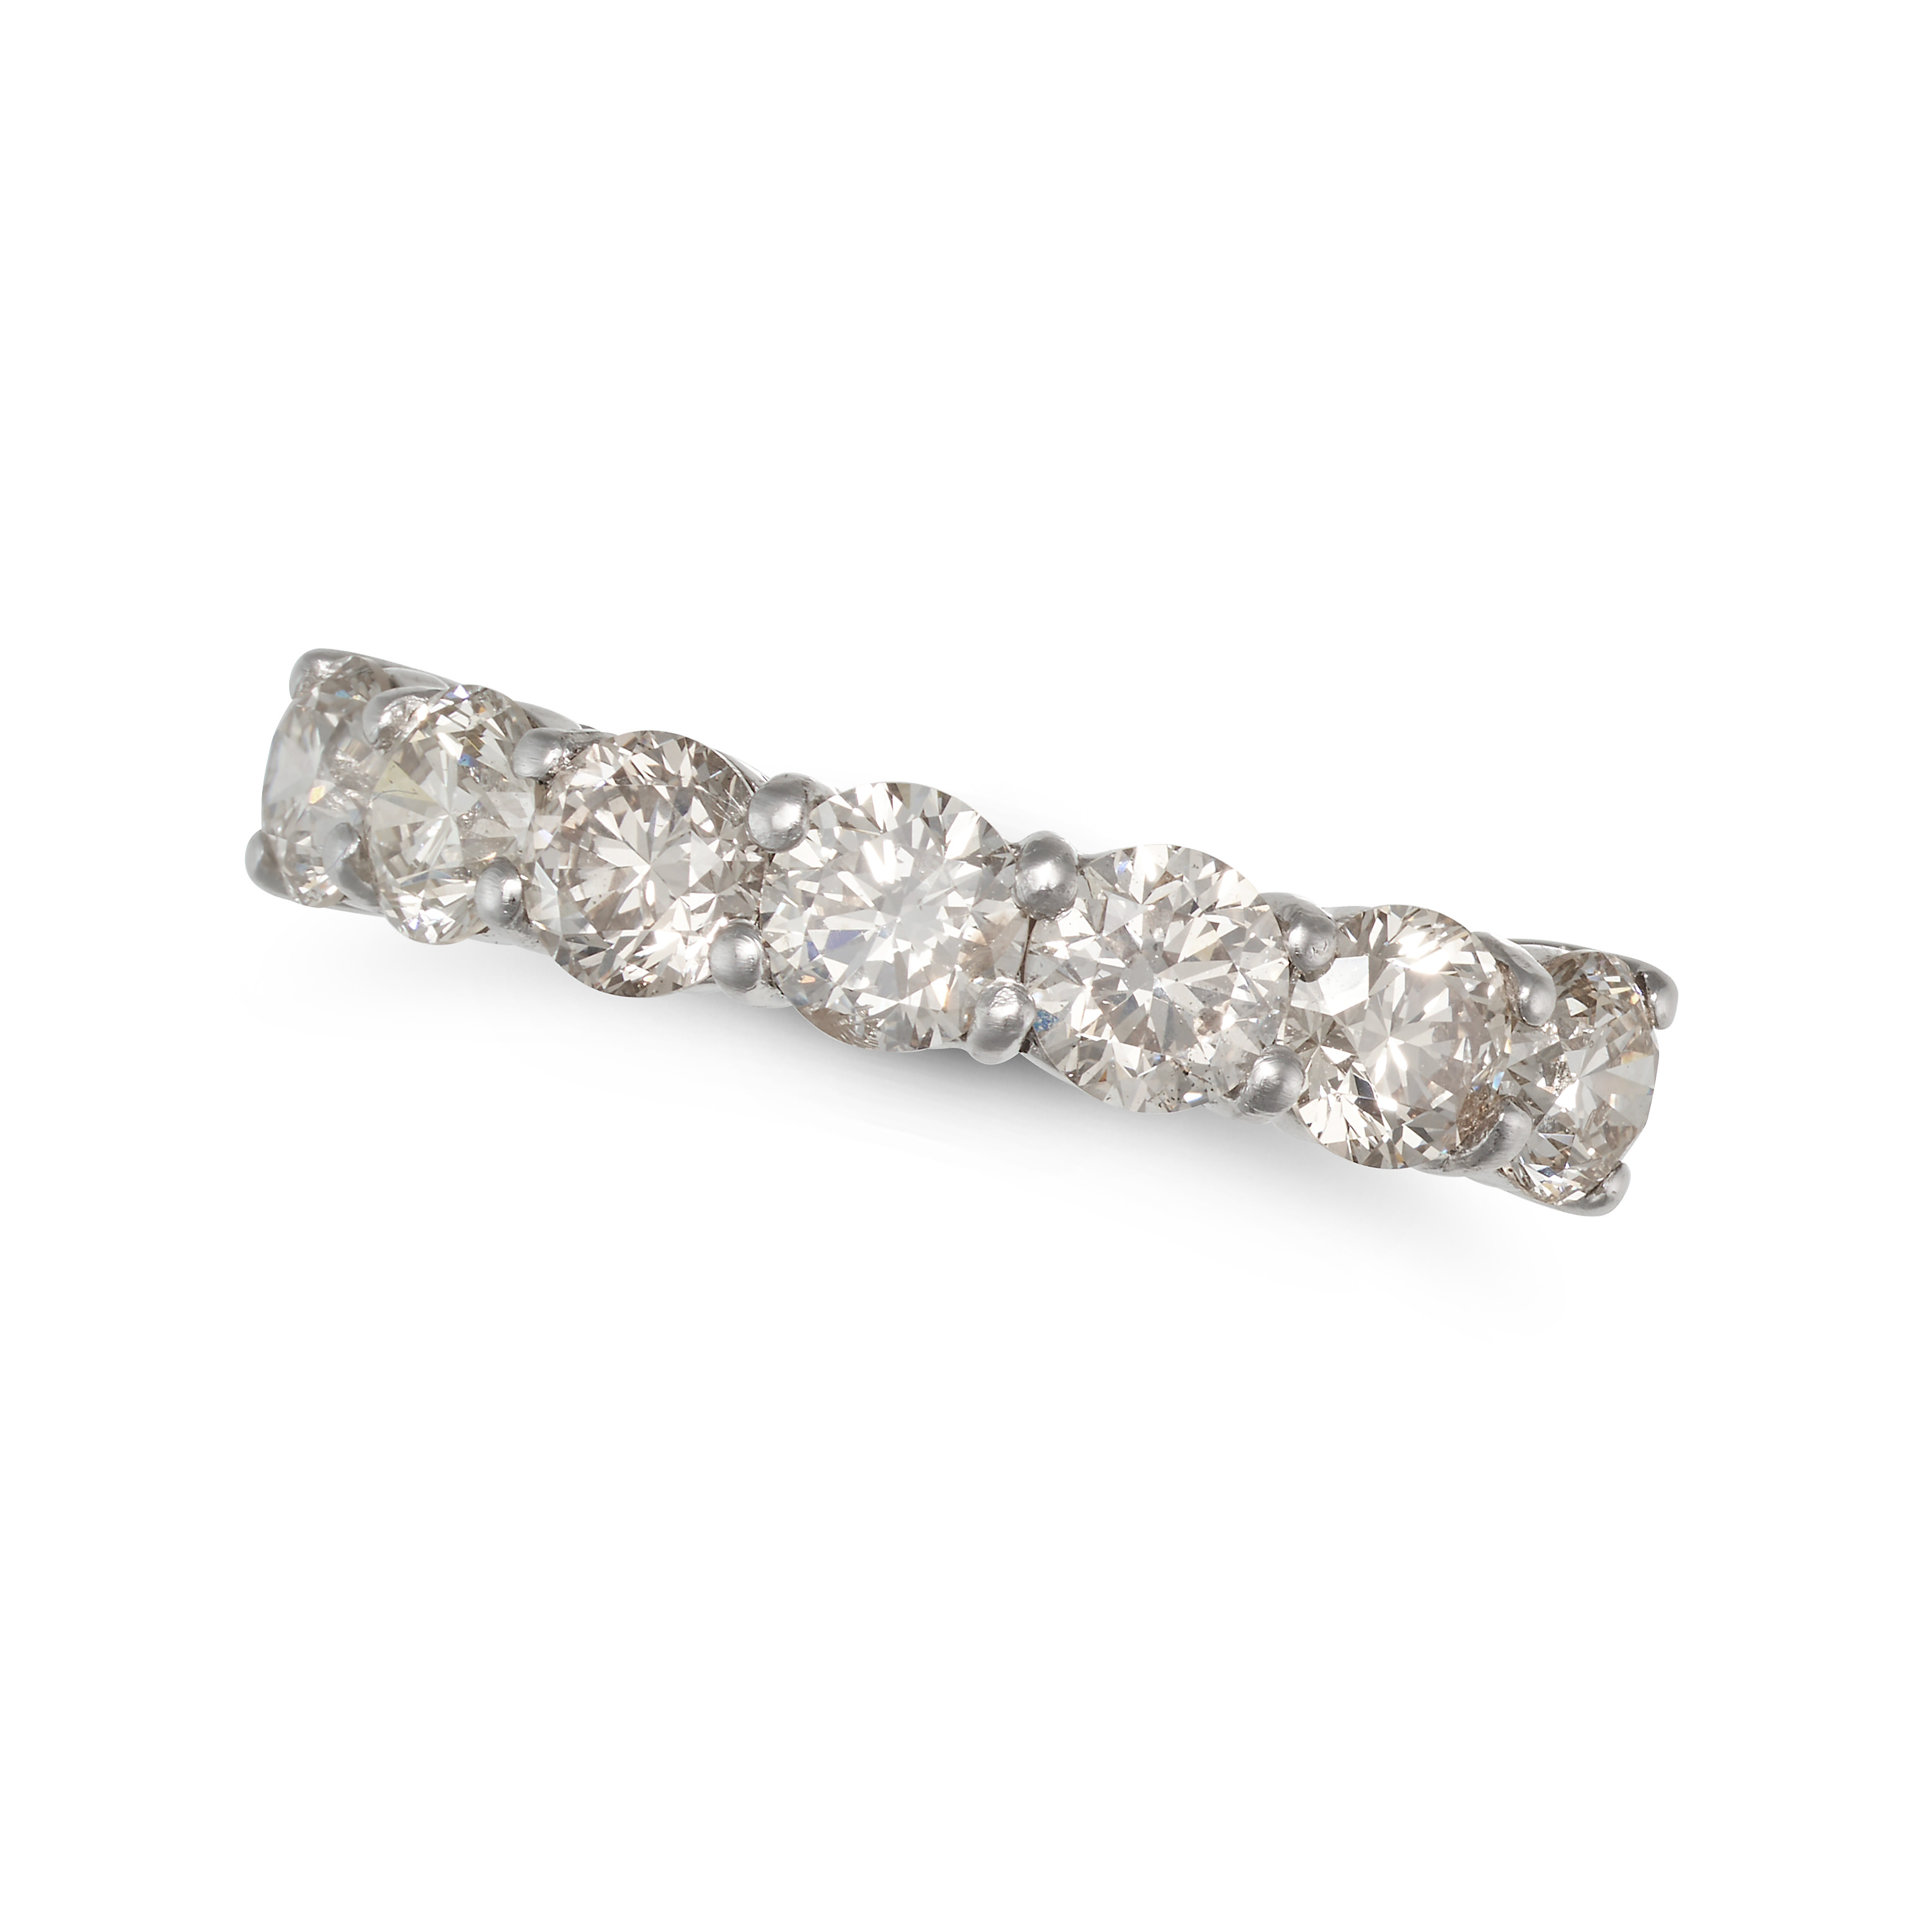 A DIAMOND HALF ETERNITY RING in 18ct white gold, set with seven round brilliant cut diamonds all ...